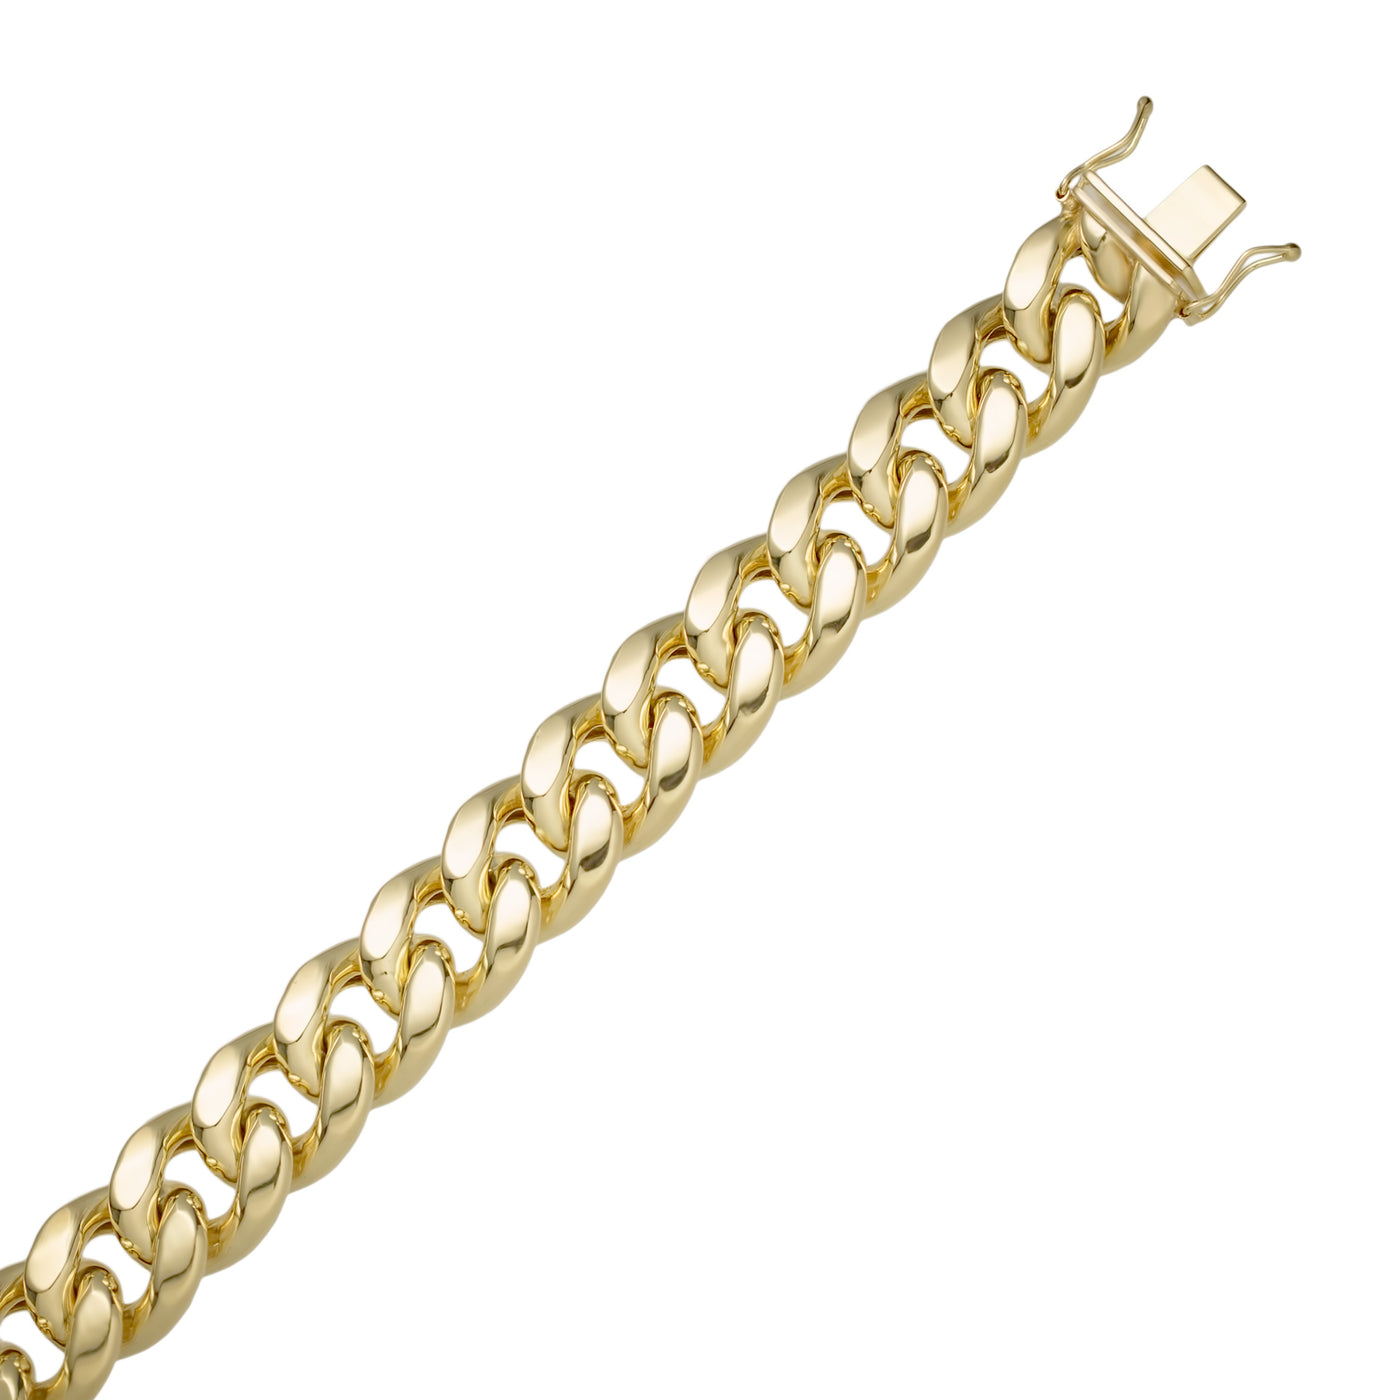 Women's Miami Cuban Link Bracelet 14K Yellow Gold - Hollow